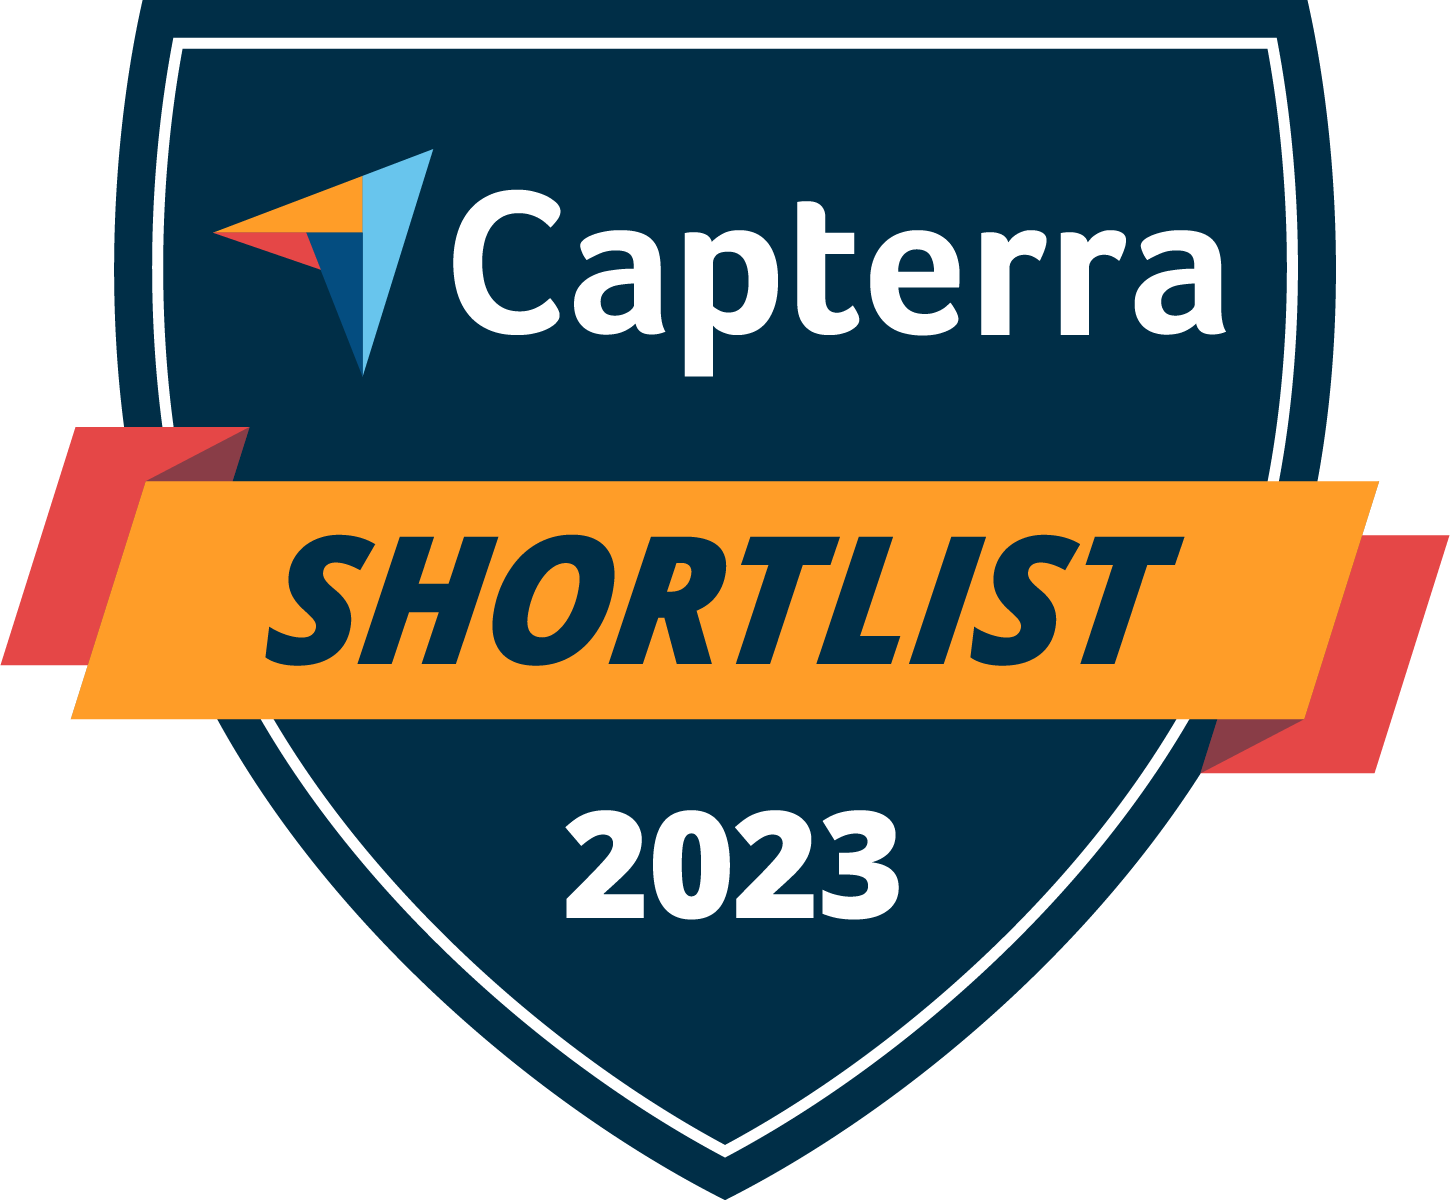 Captera Shortlist 2023